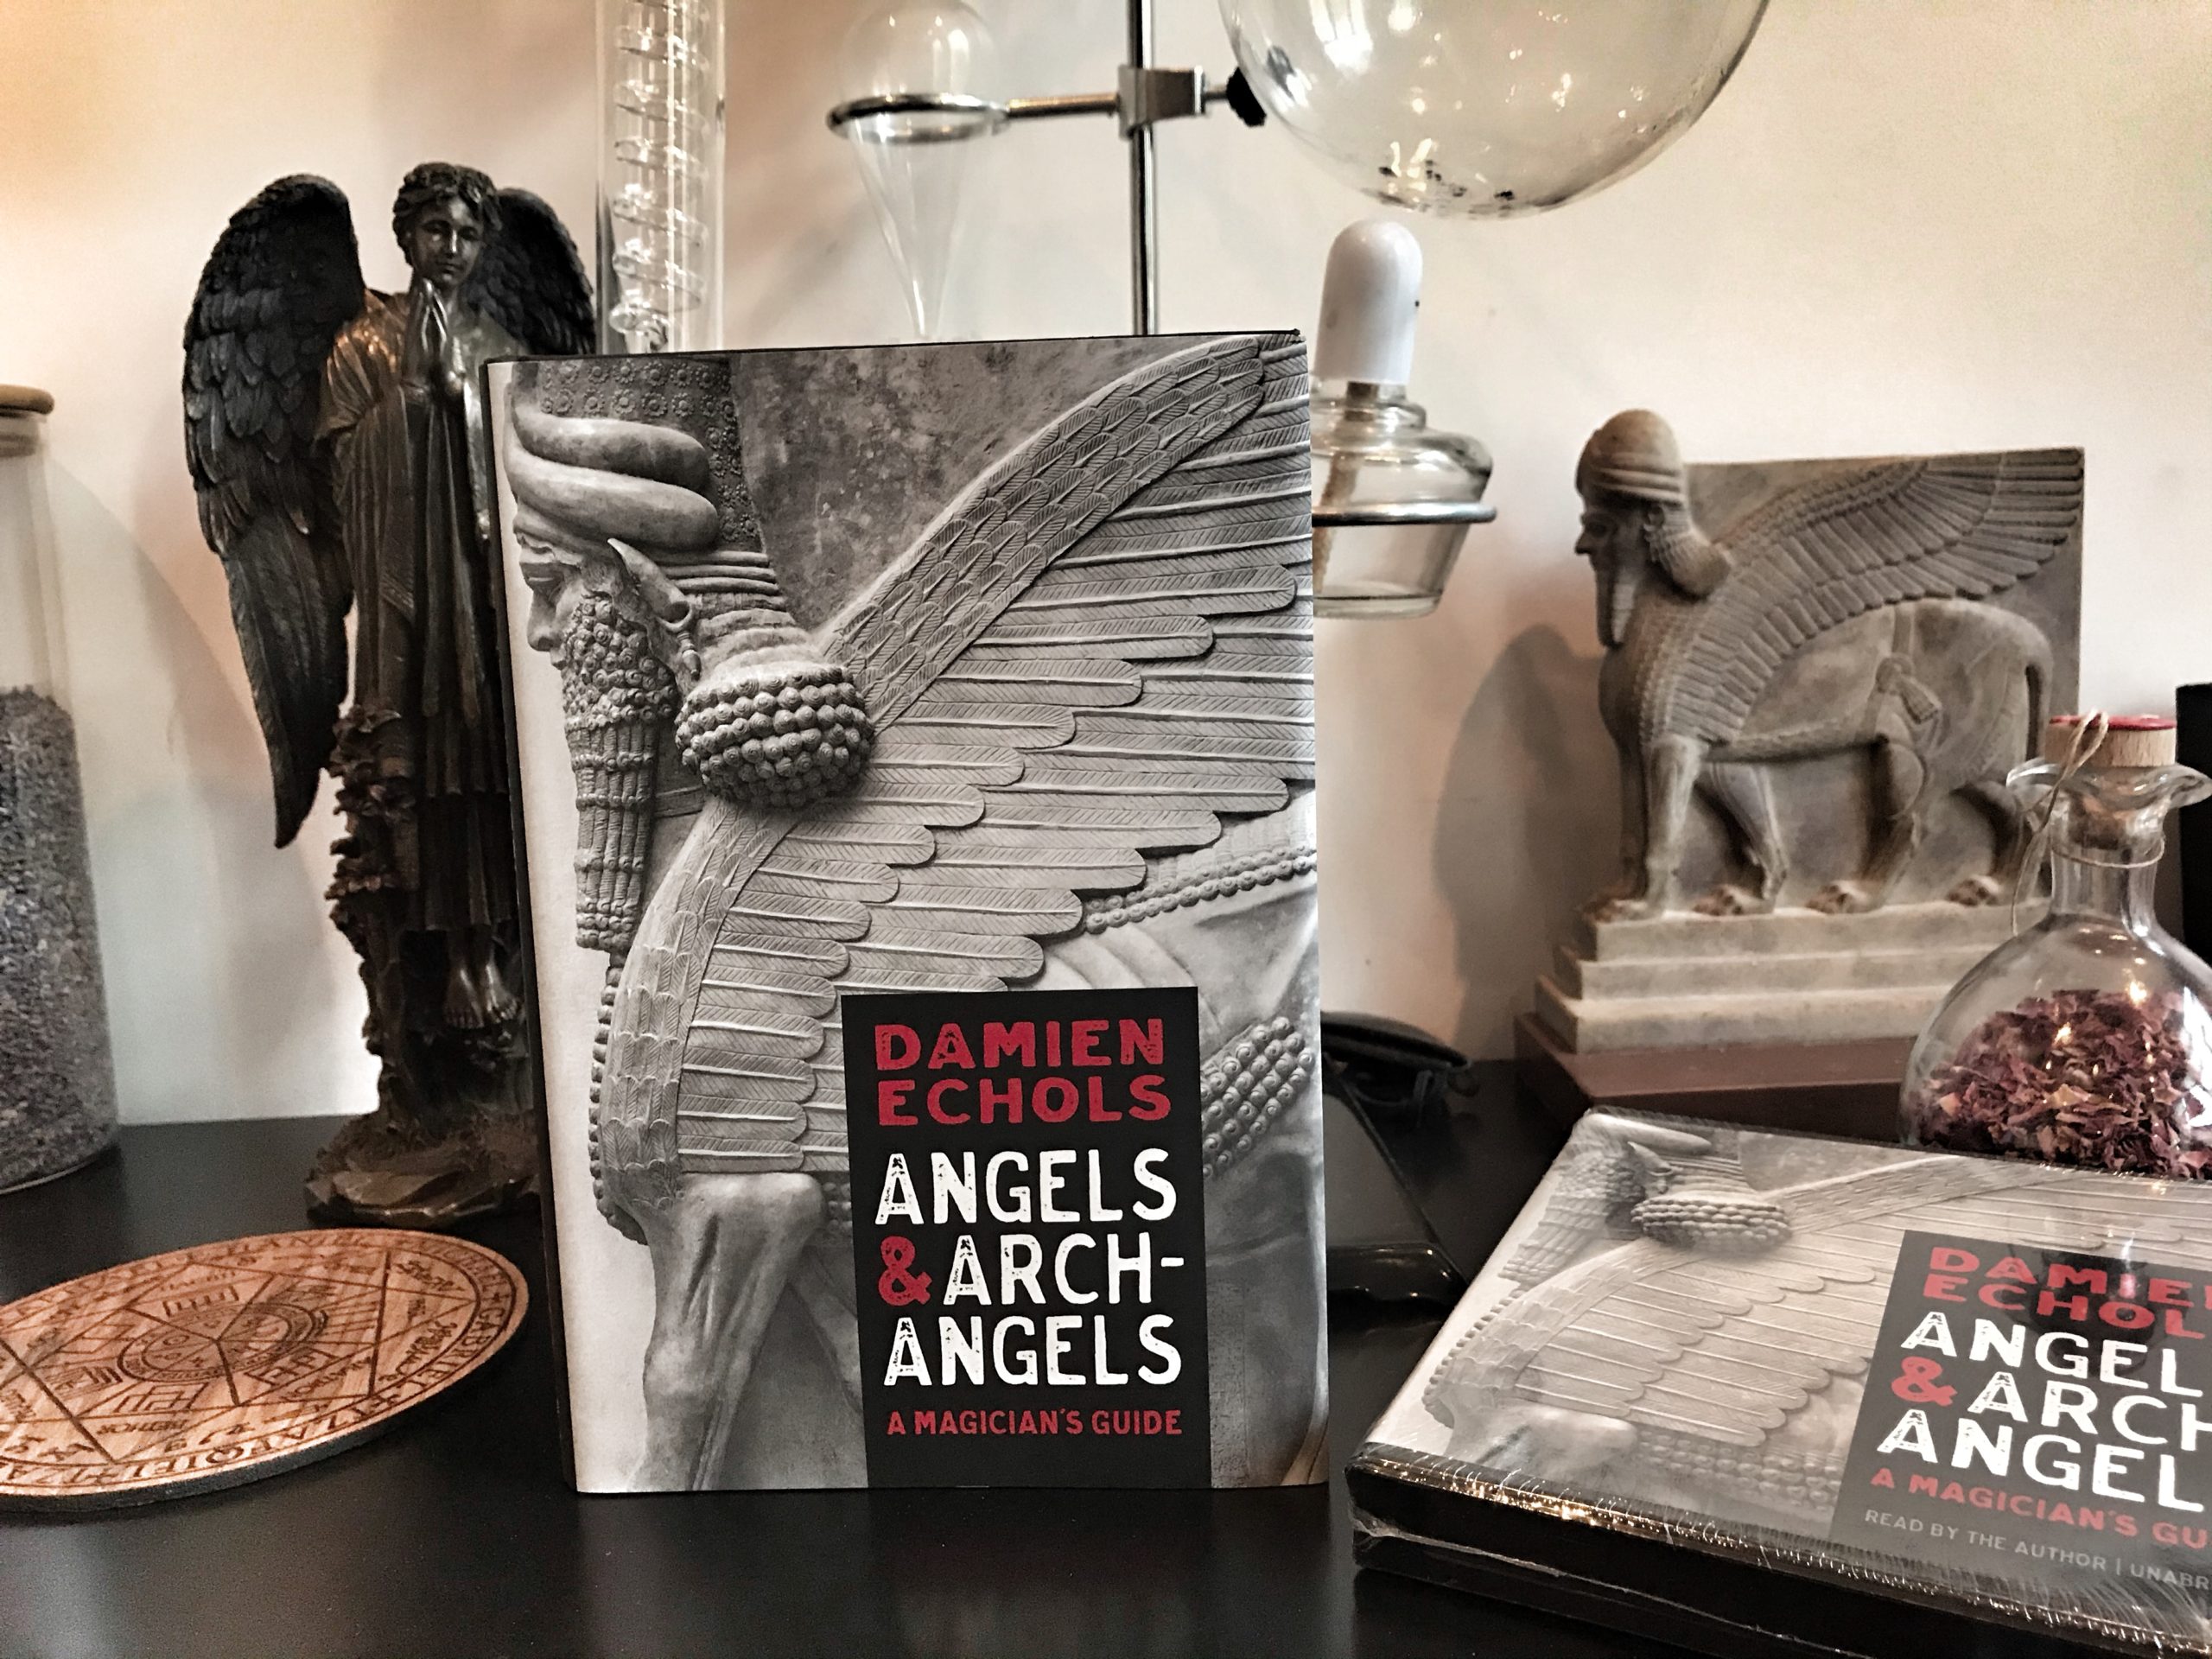 Angels & Archangels book by Damien Echols